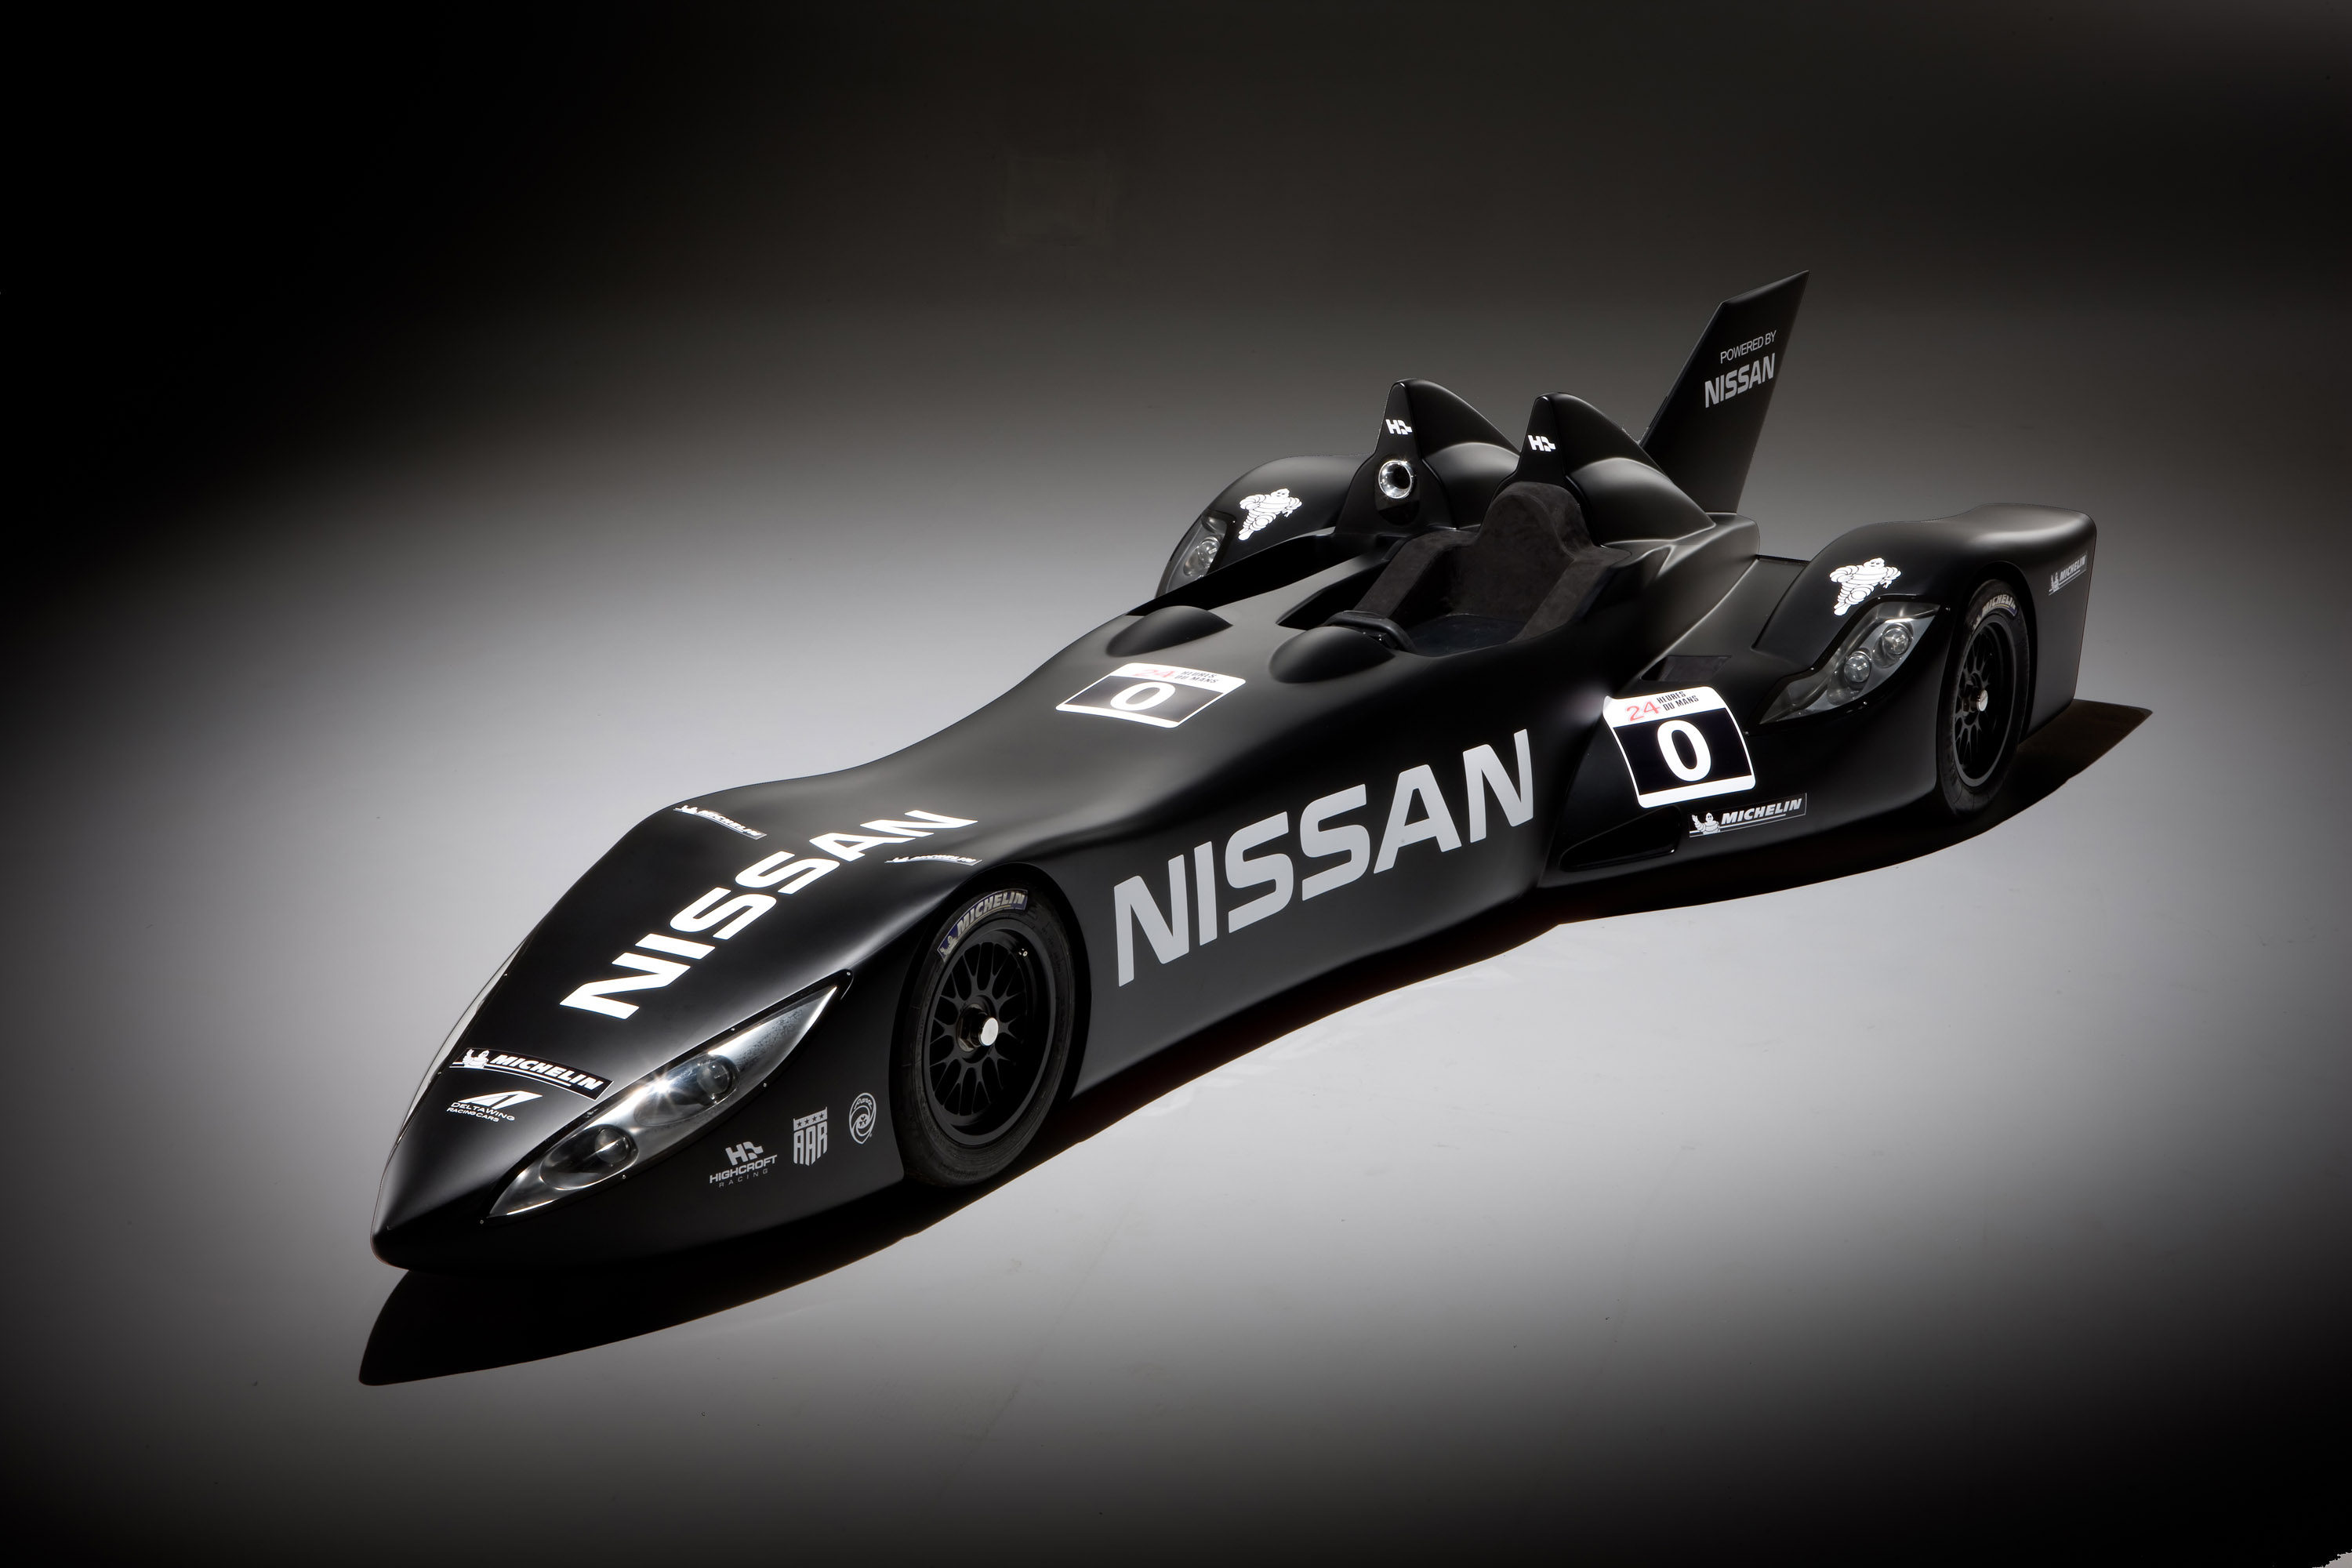 Nissan DeltaWing experimental racecar